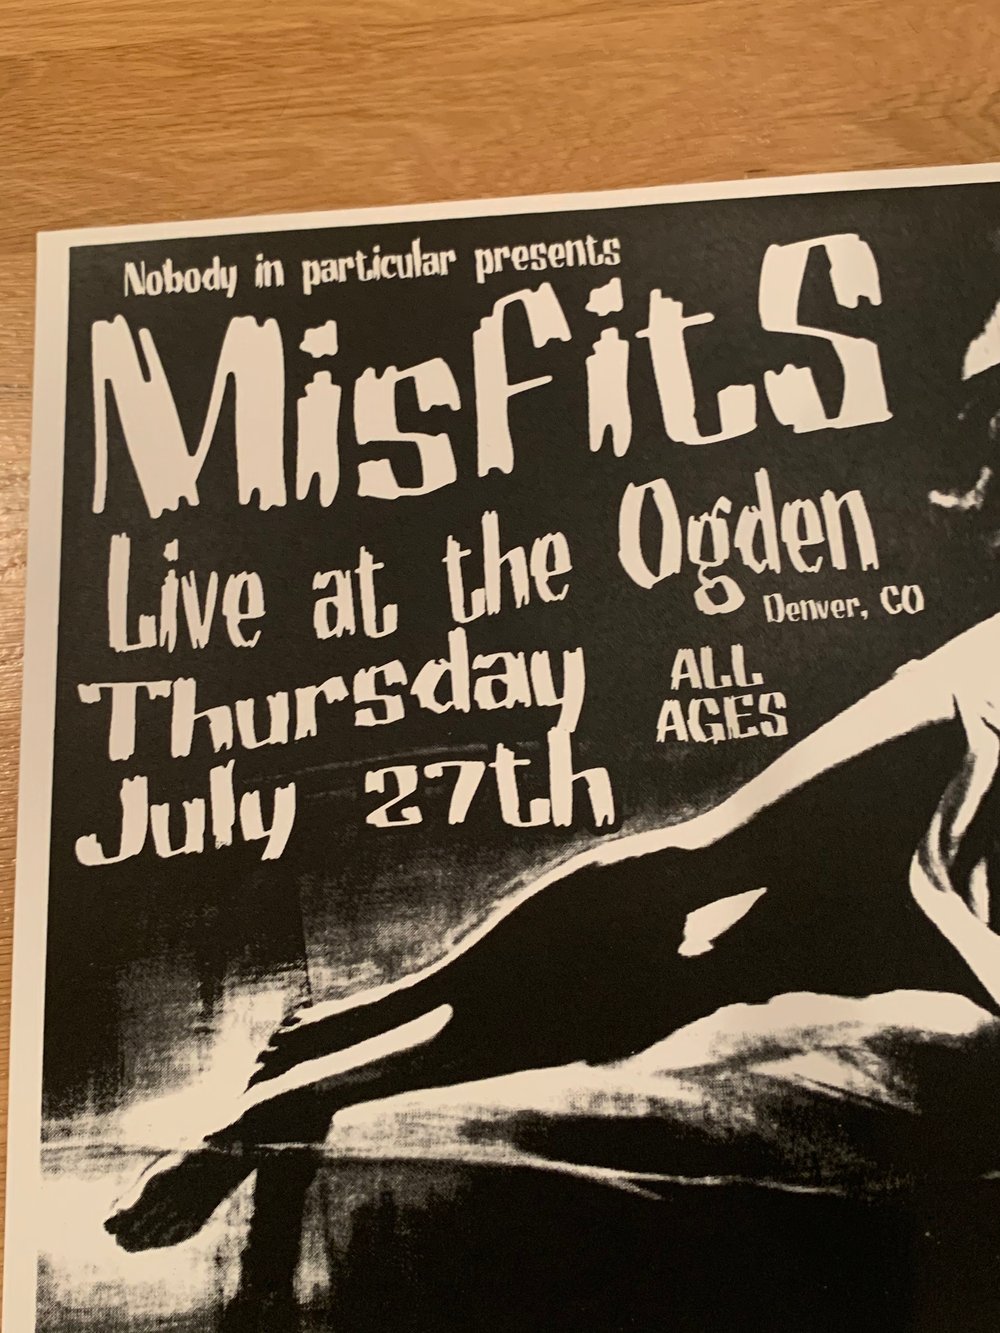 Misfits (Misprint Variant) Silkscreen Concert Poster By Lindsey Kuhn